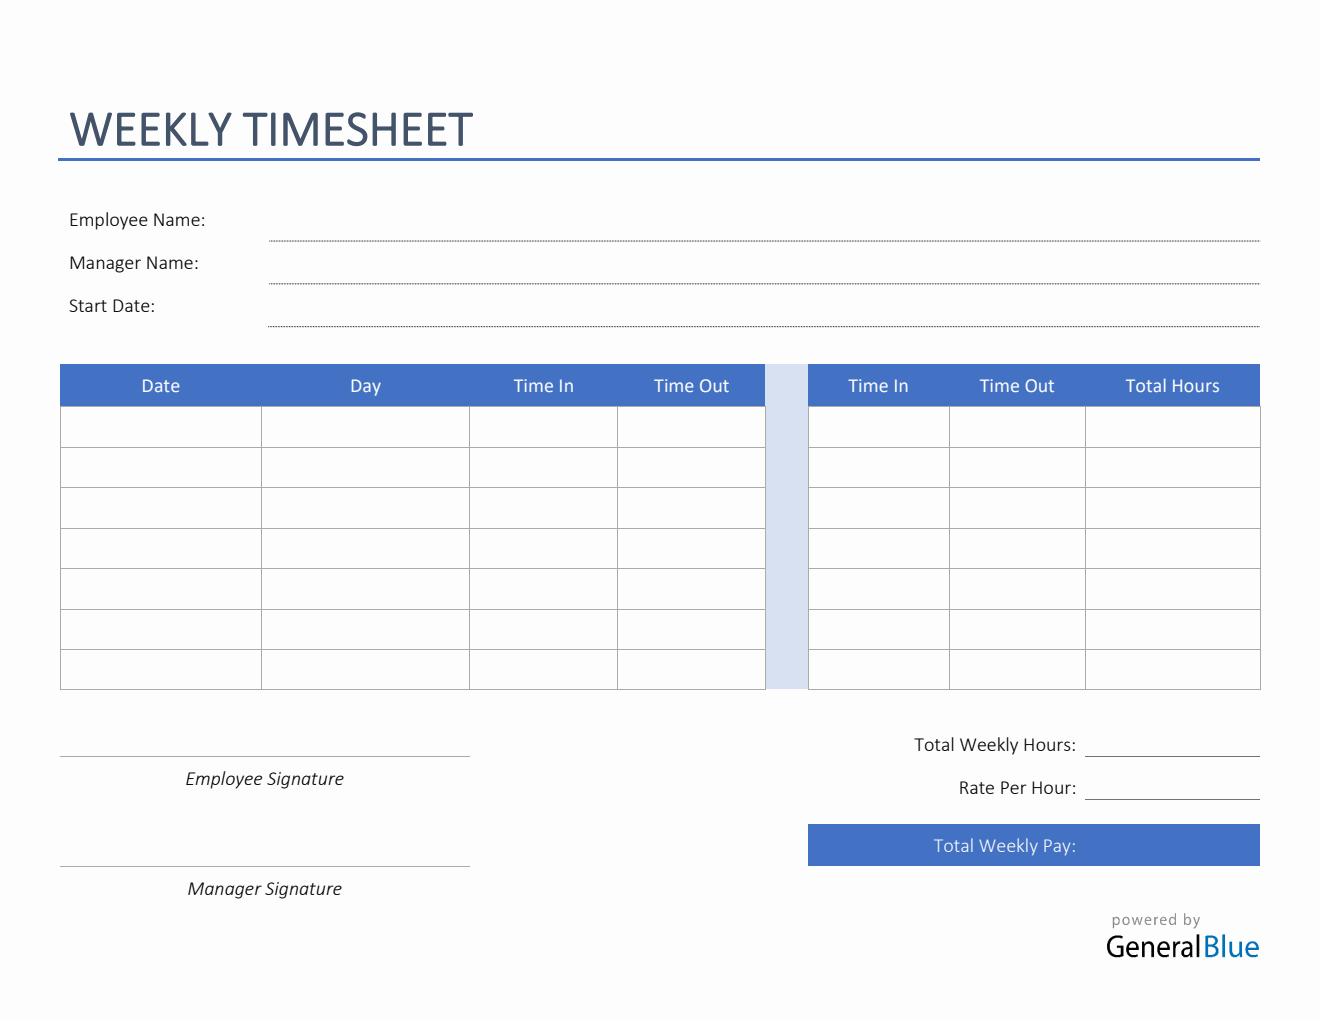 Weekly Employee Timesheet In PDF